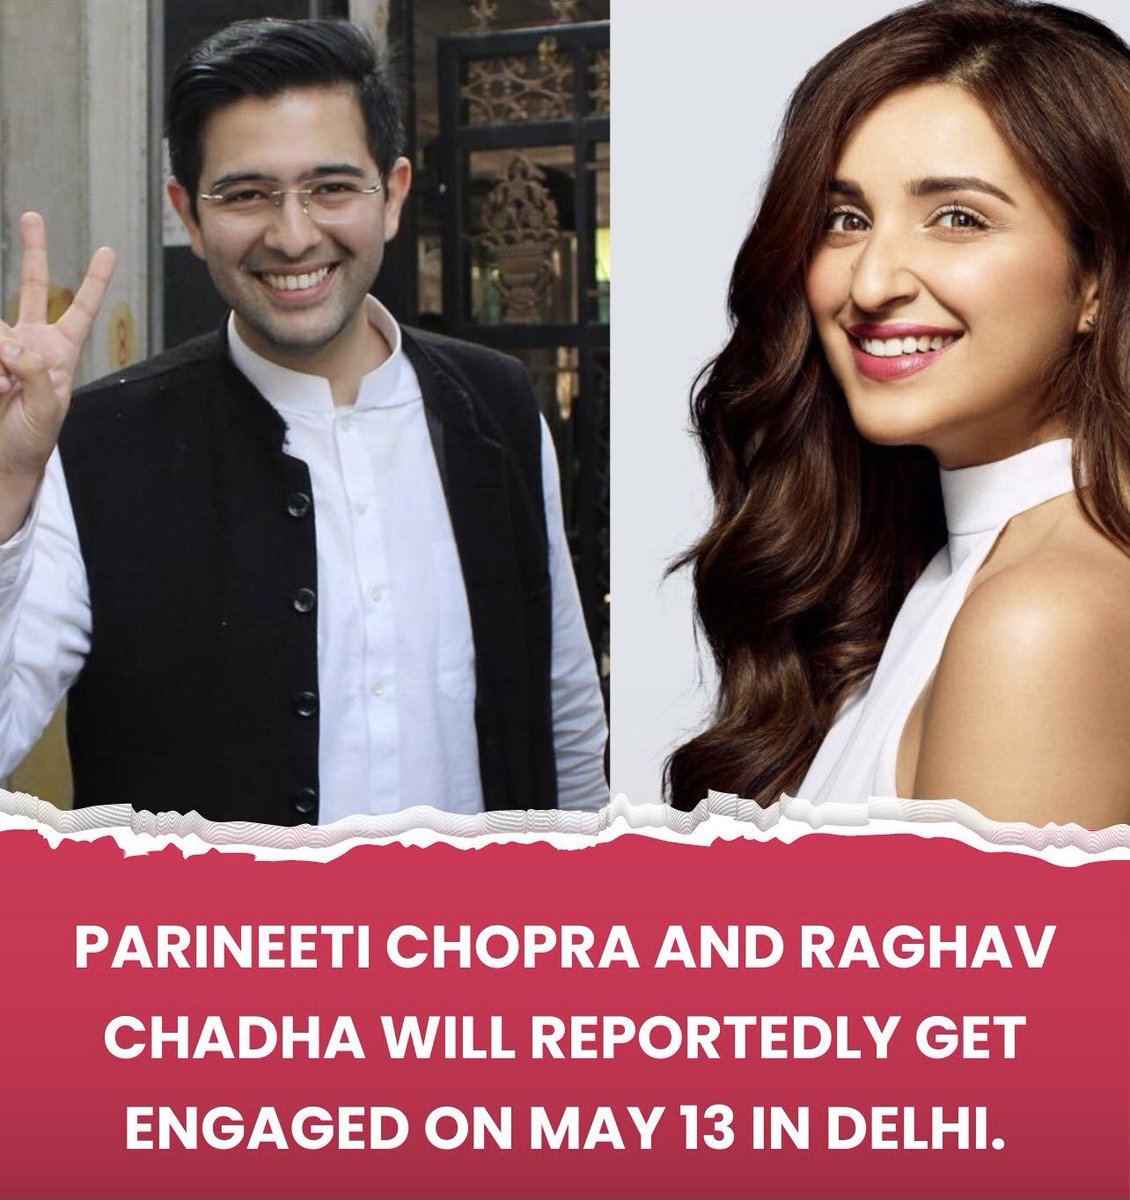 Actor Parineeti Chopra and politician Raghav Chadha will get engaged in New Delhi on May 13, after weeks of speculation.

#raghavchadha #parineetichopra #aamaadmiparty #delhi #politicalperson #politician #bollywoodactress #raghavparineeti #indiancelebrities #seekcelebrity